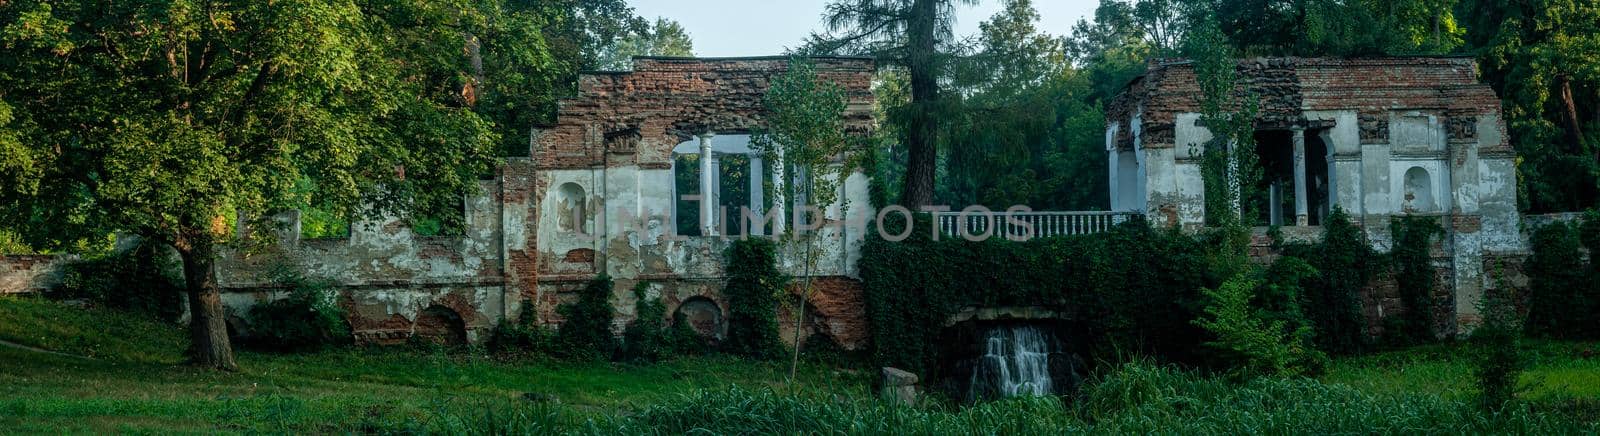 Waterfall Ruines in Alexandria Park in Bila Tserkva Ukraine 2019